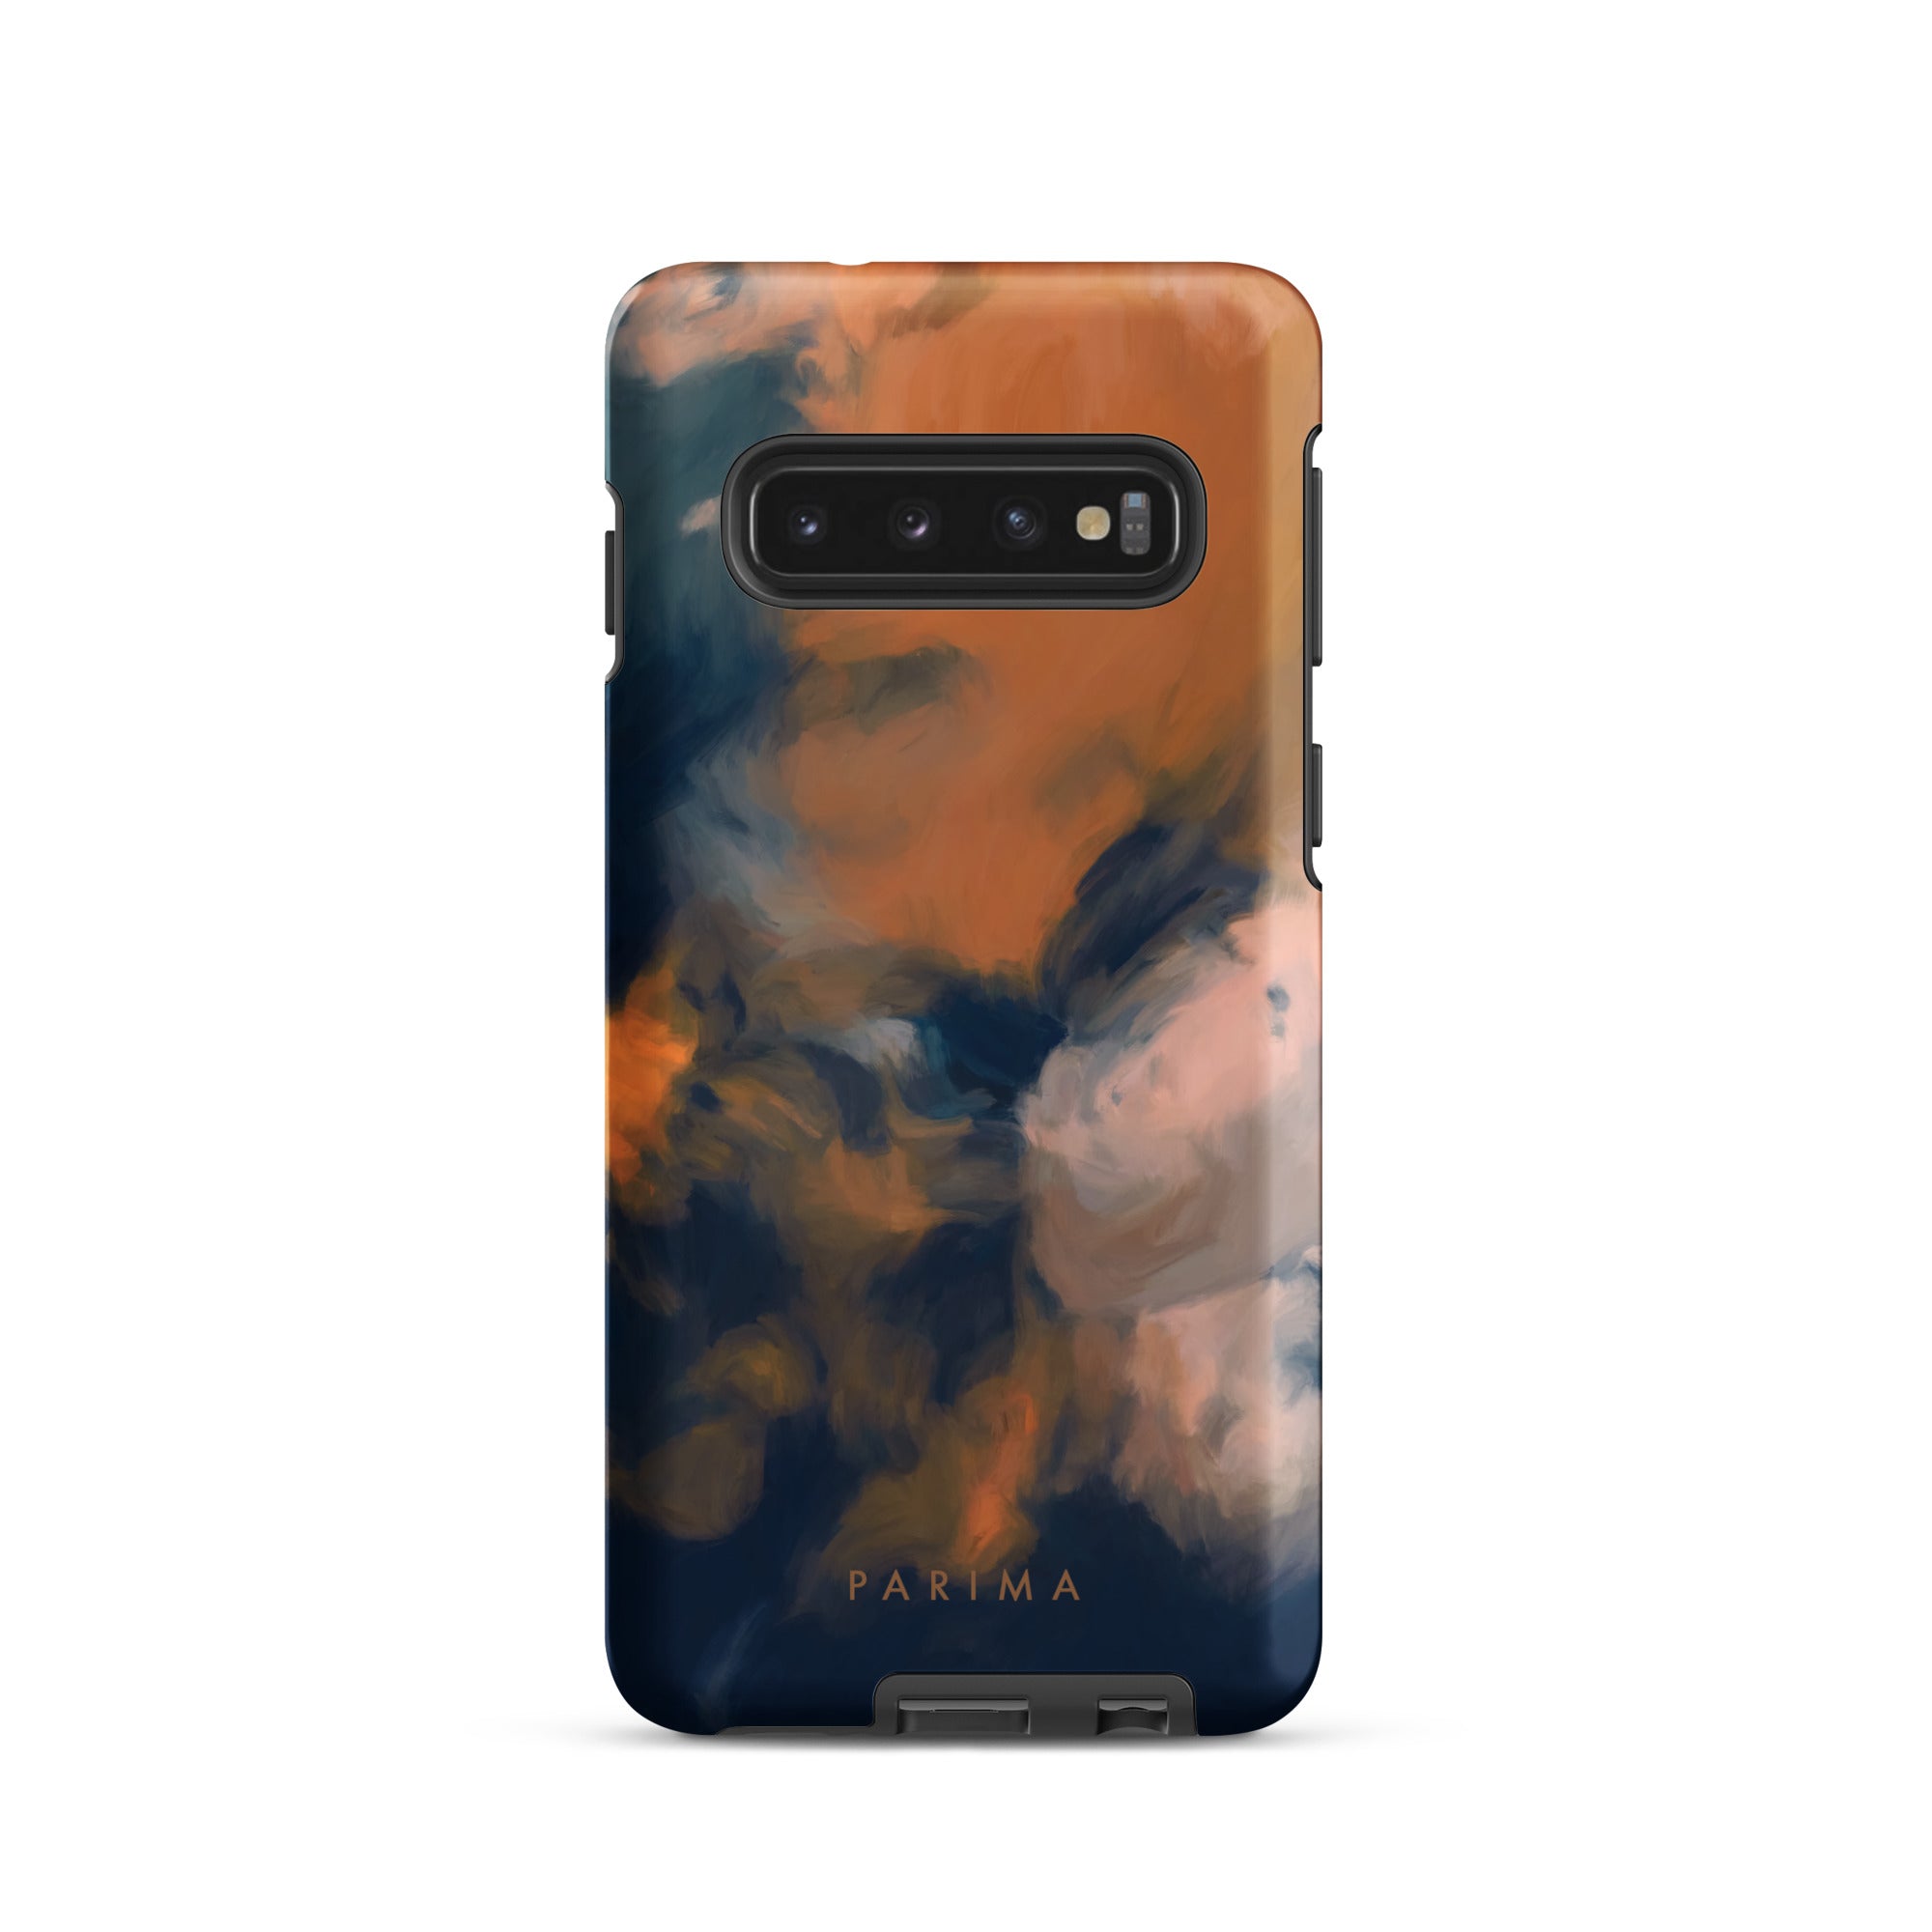 Mia Luna, blue and orange abstract art on Samsung Galaxy S10 tough case by Parima Studio